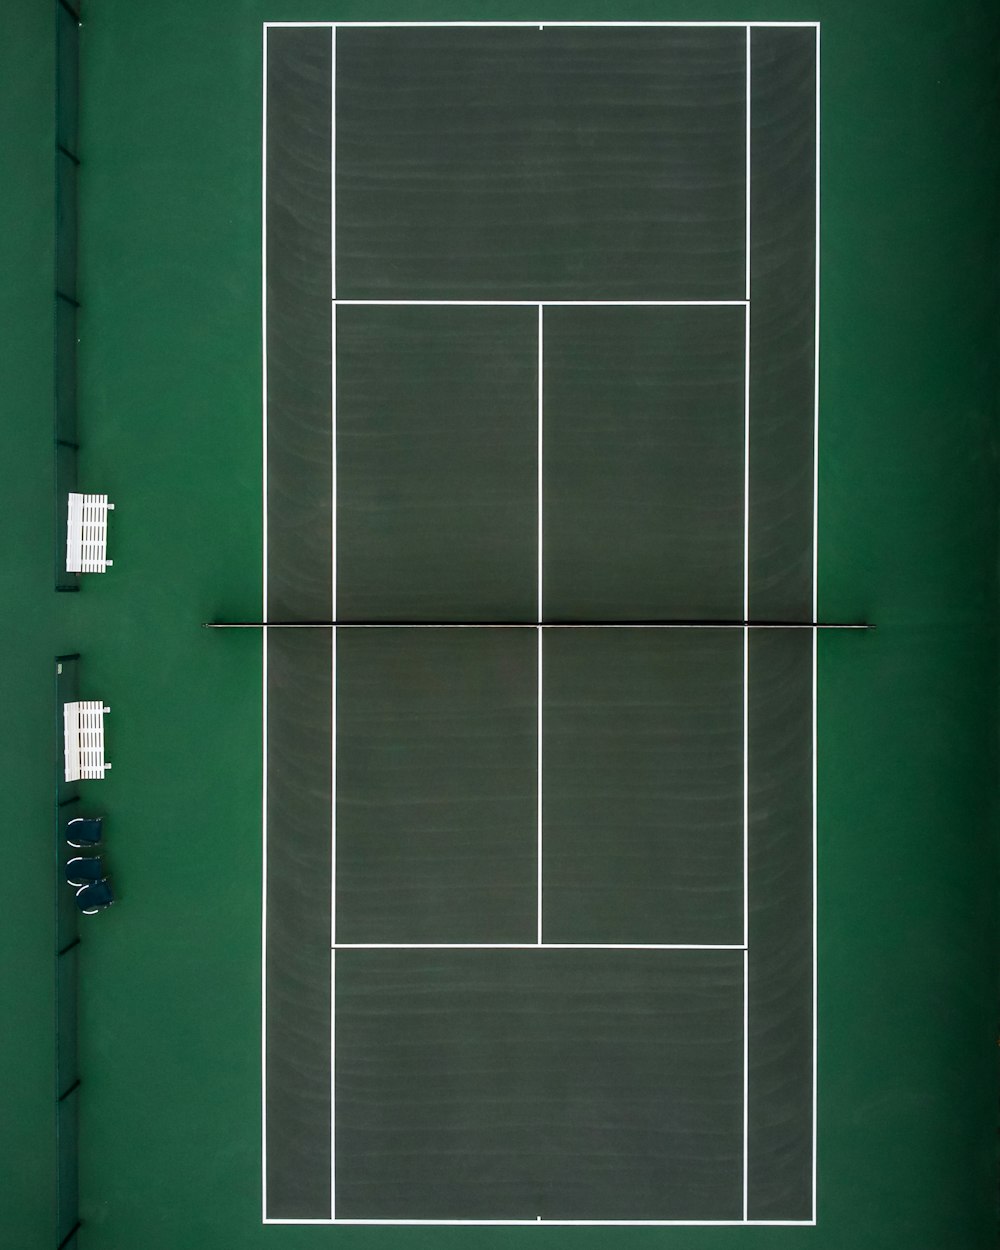 Grüner Tennisplatz